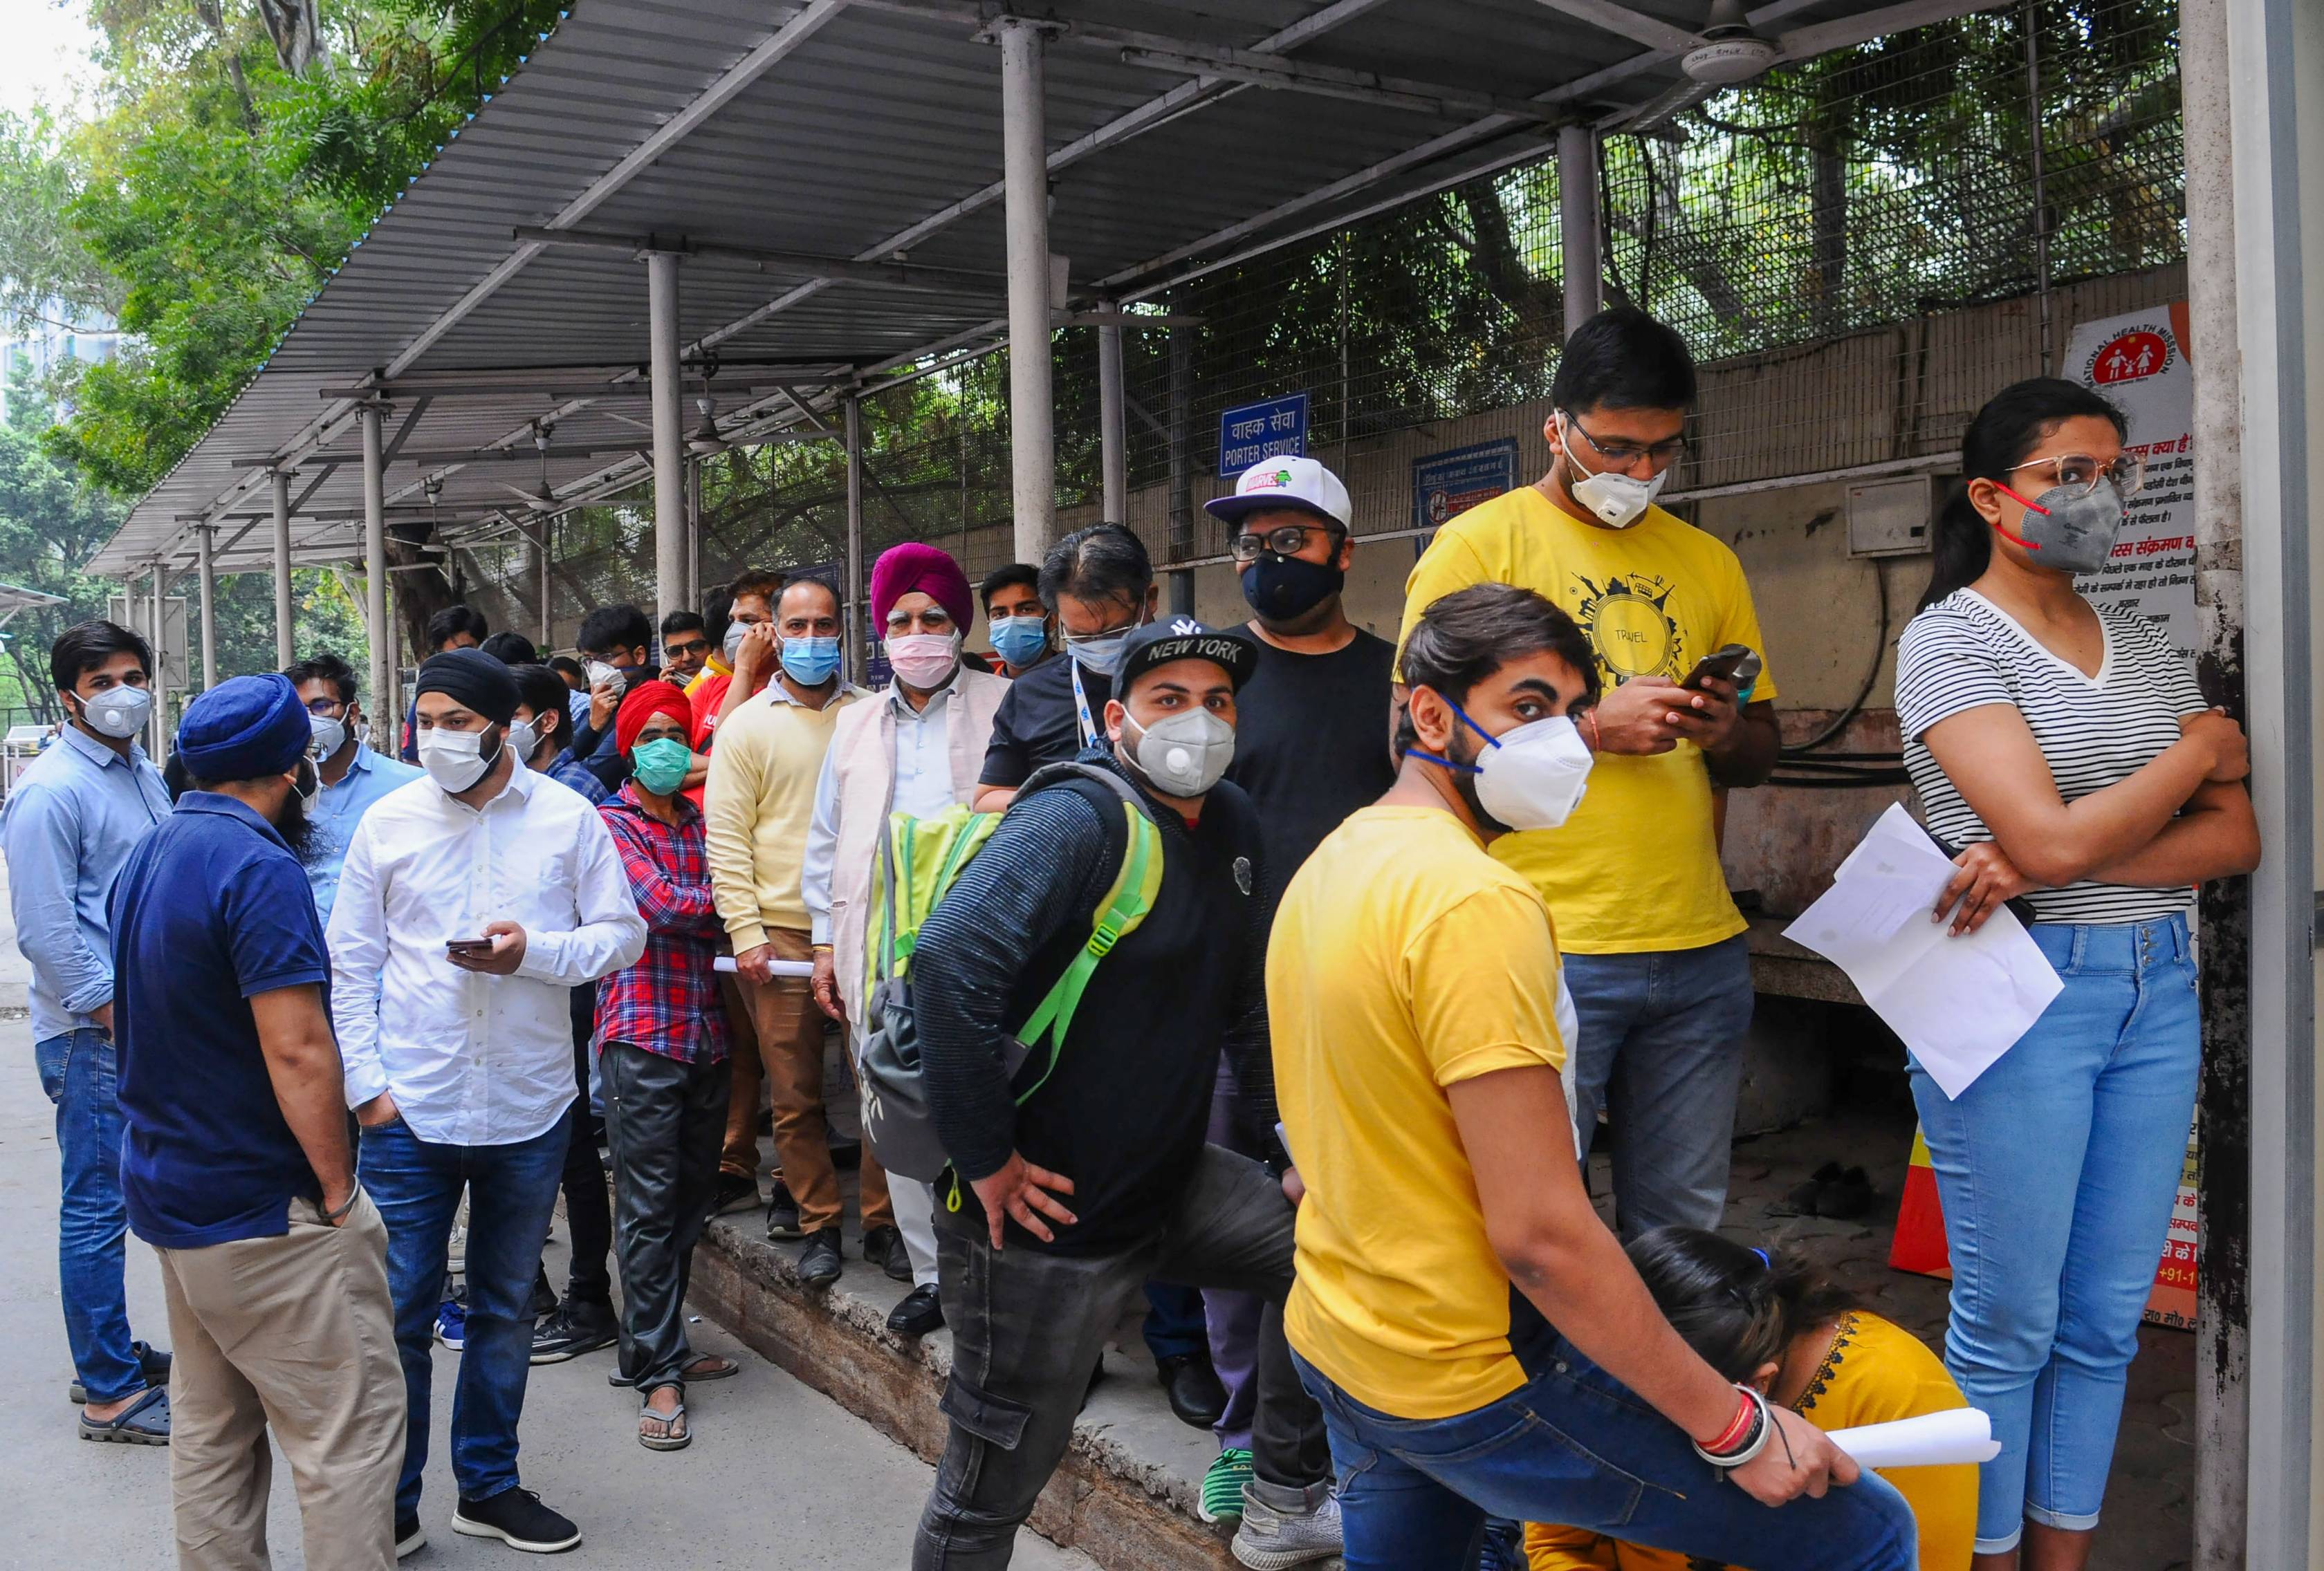 Paytm says employee in Gurgaon tests positive for coronavirus